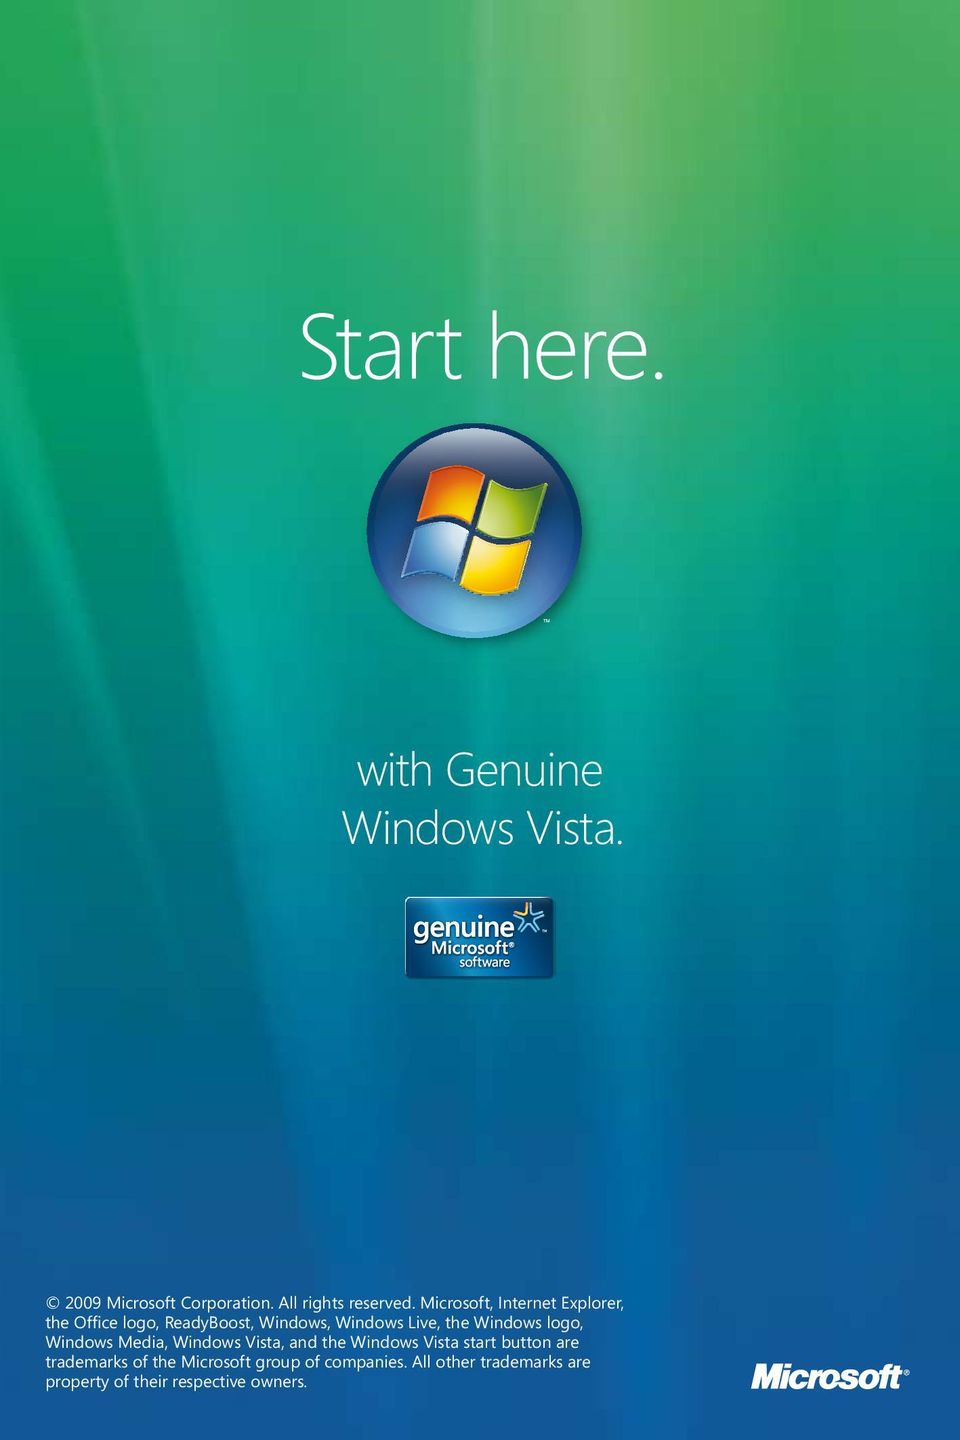 Windows logo, Windows Media, Windows Vista, and the Windows Vista start button are